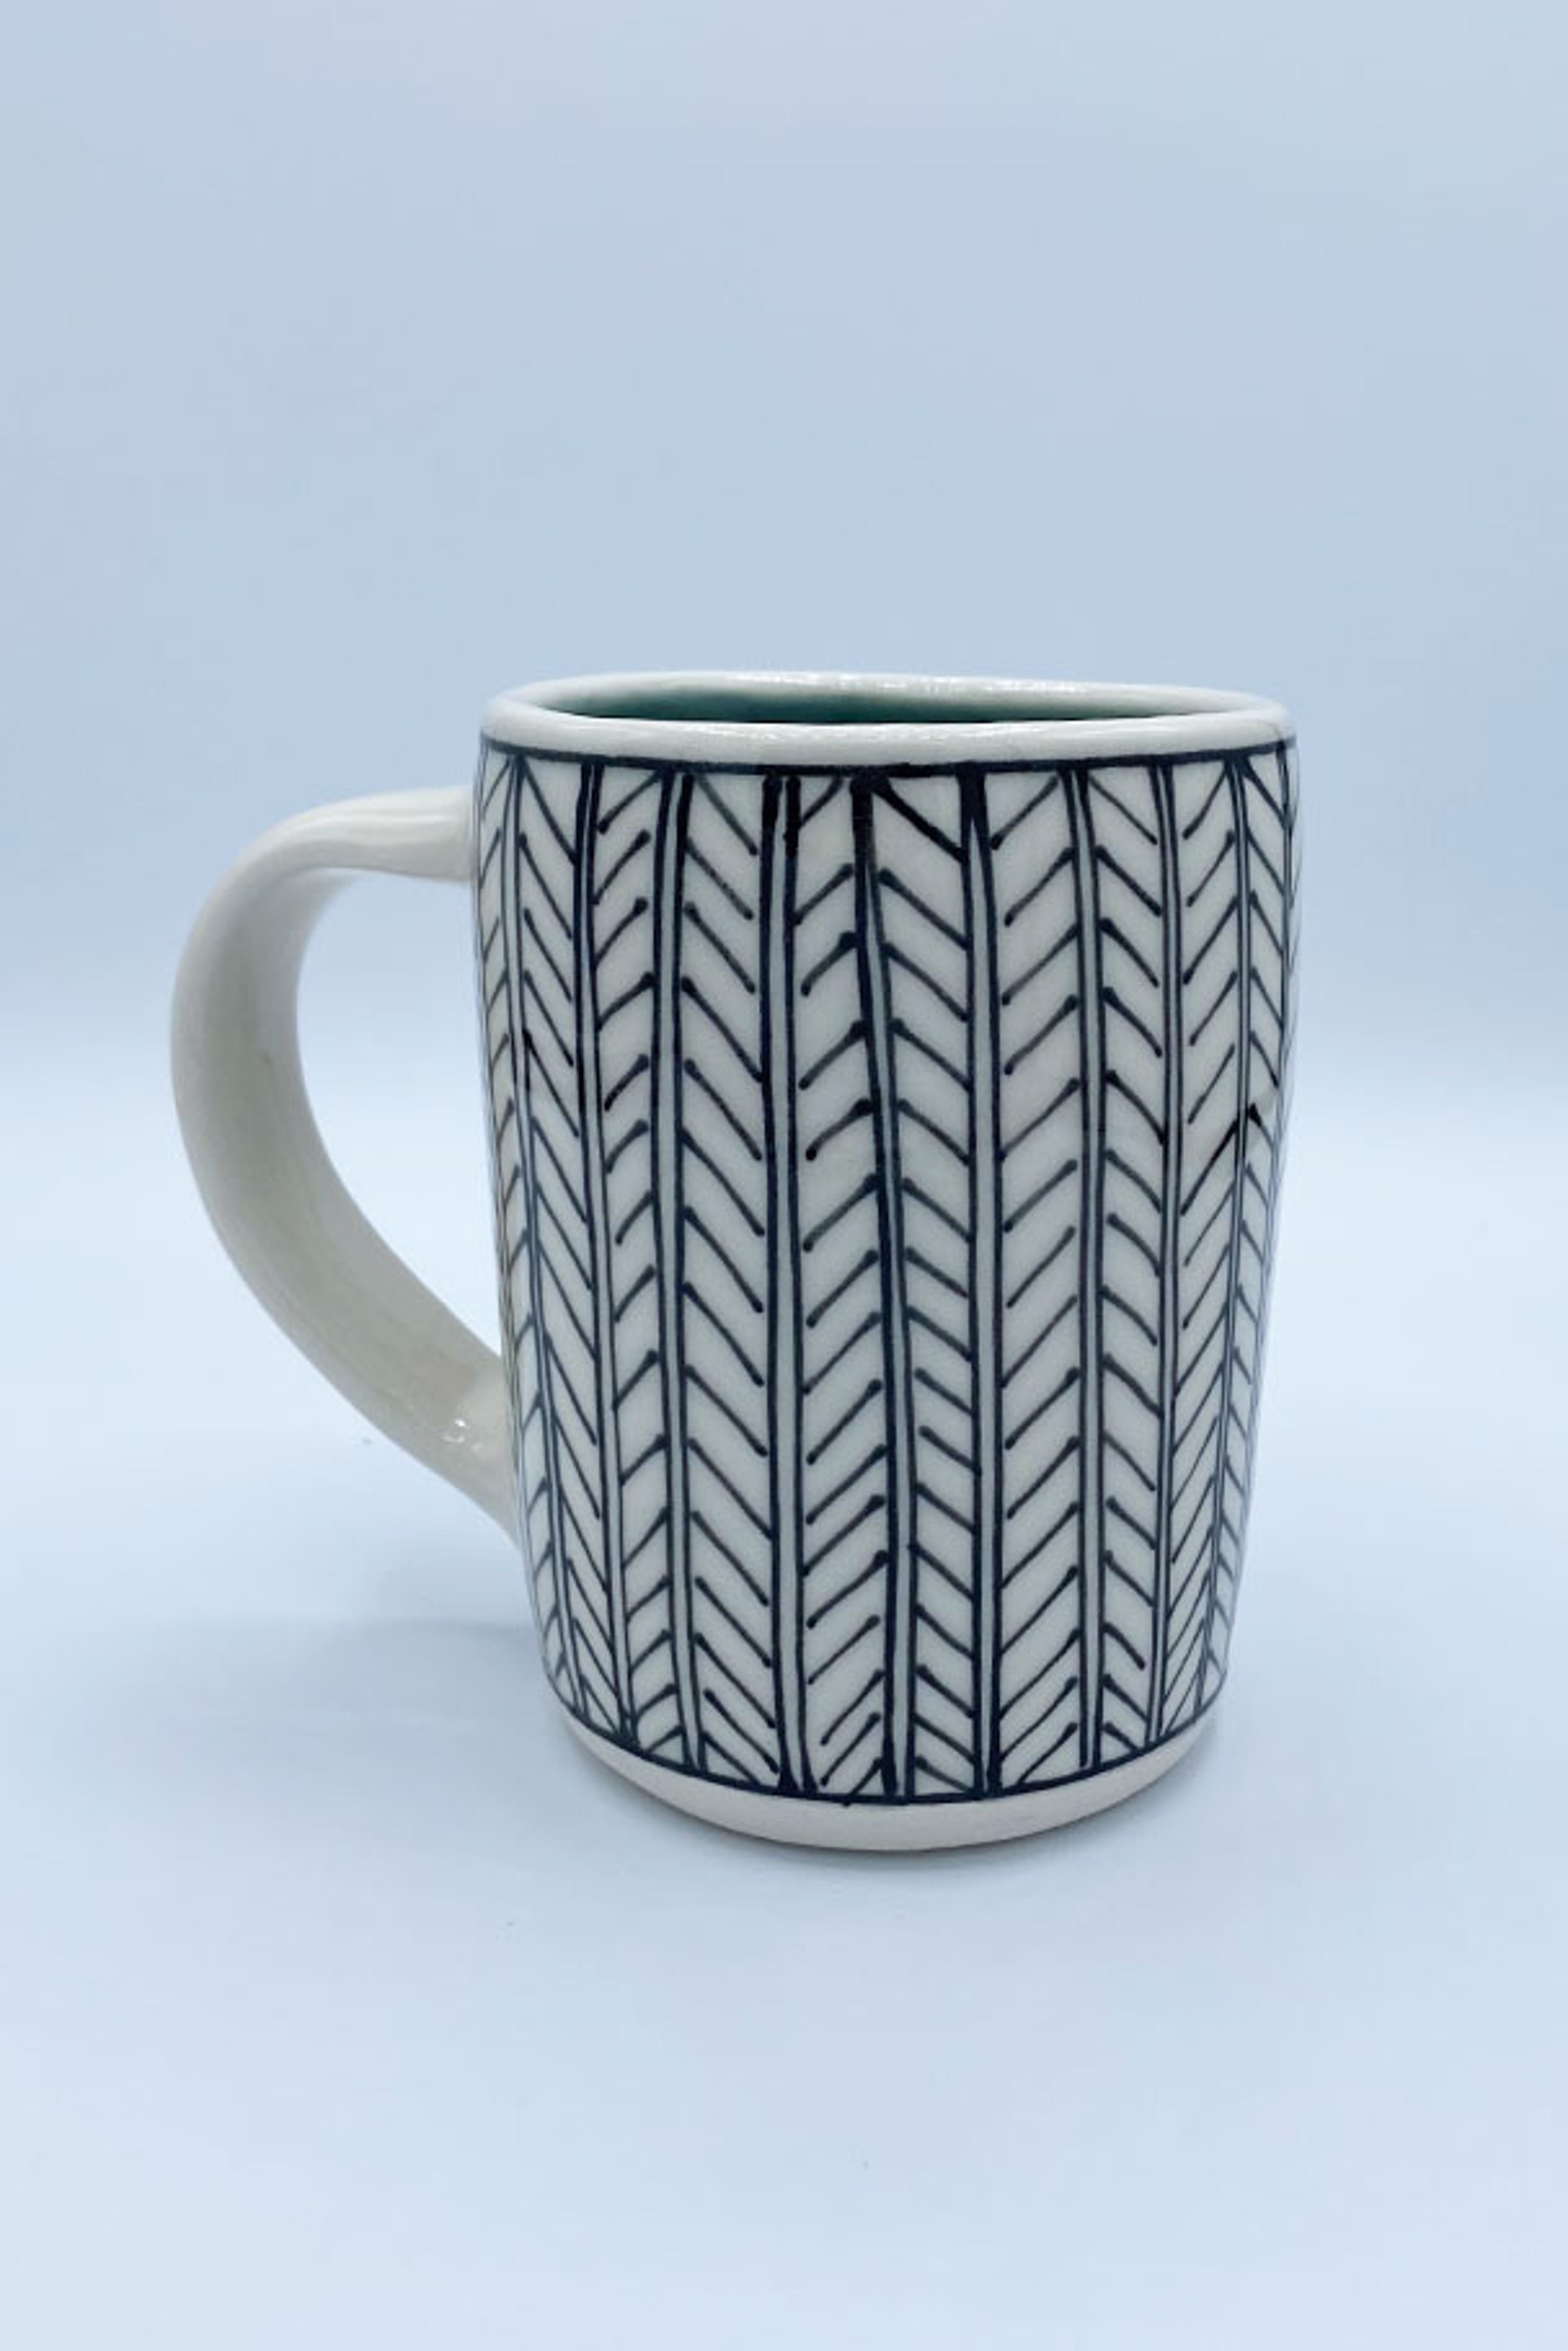 Mug 1 by Laura Cooke